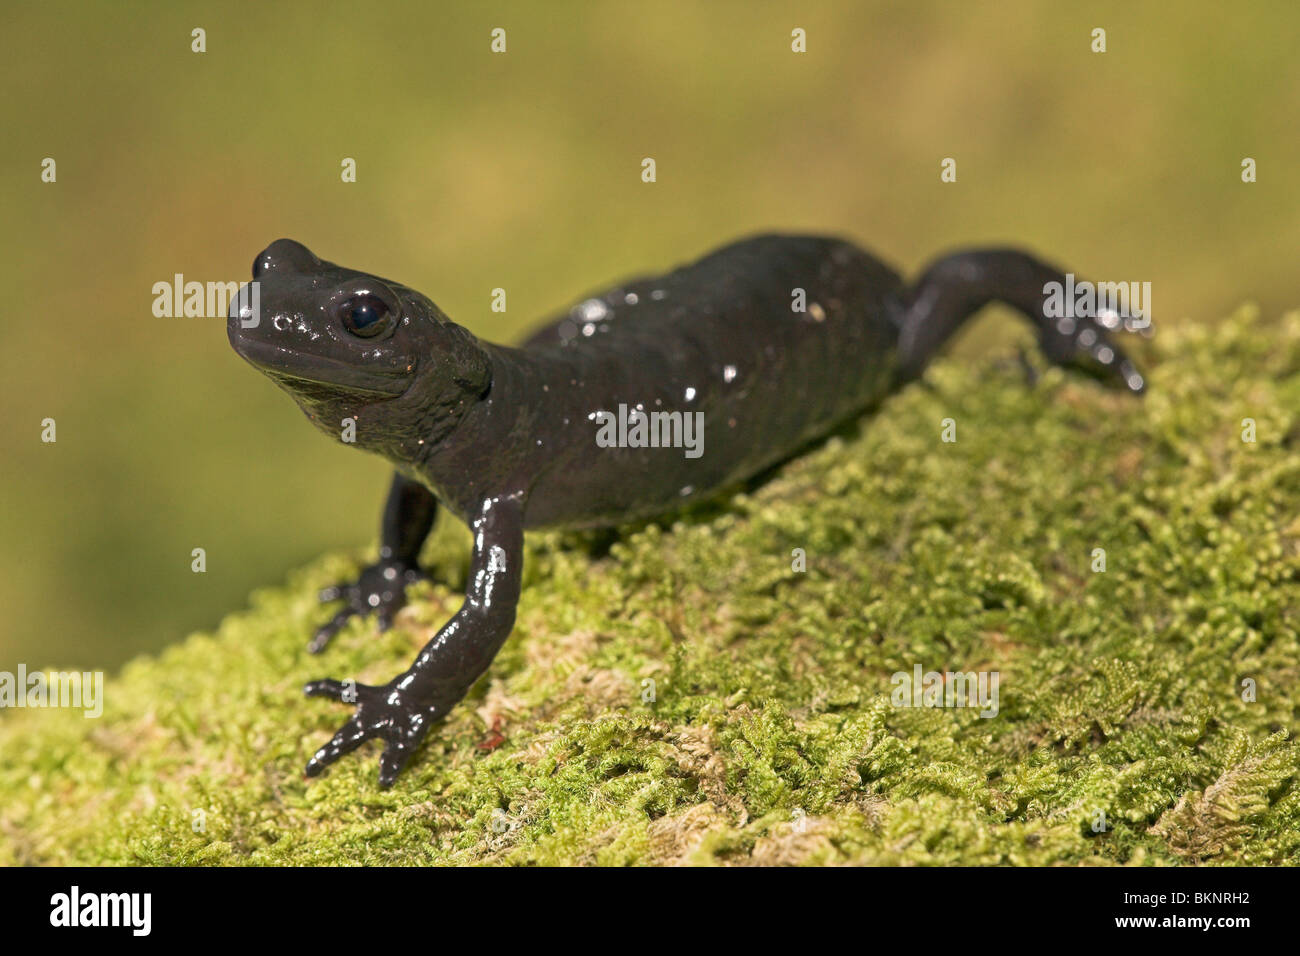 photo of a black alpine salamander on green moss Stock Photo